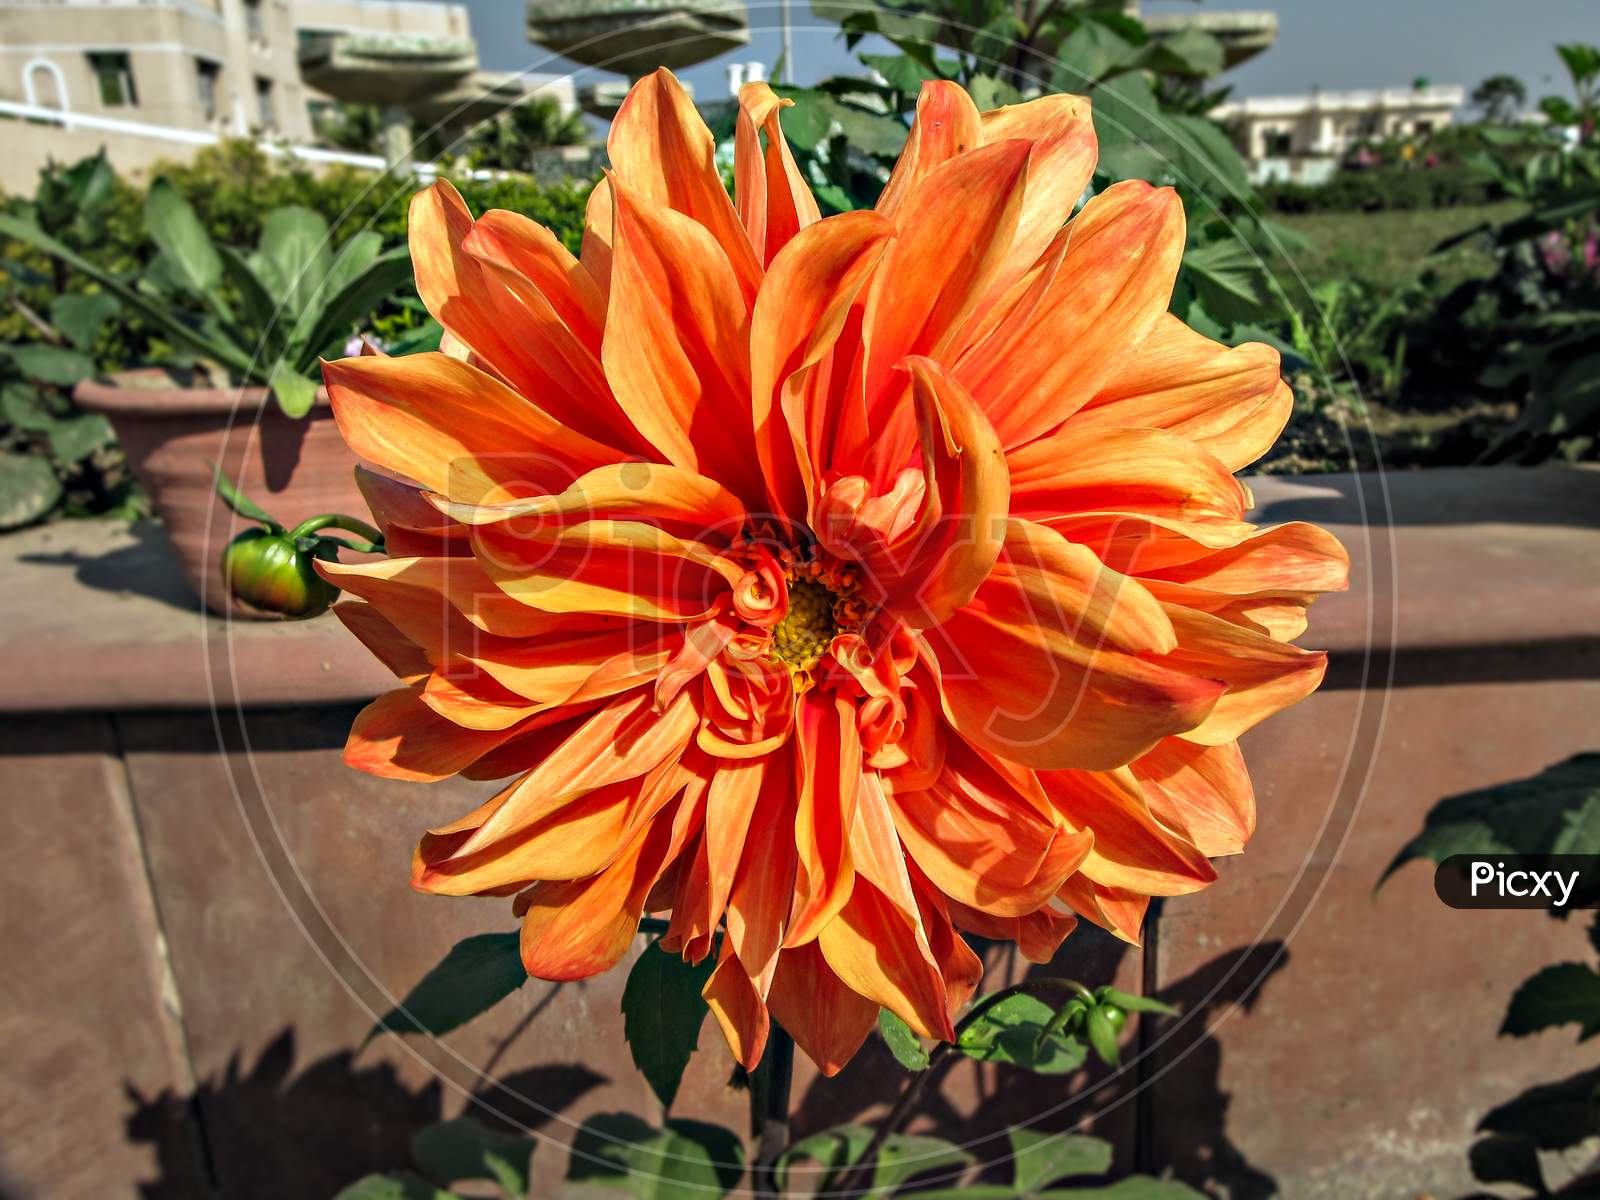 Selective Focus, Blur Background, Close Up Of Bright Orange Dahlia Flower In Park.